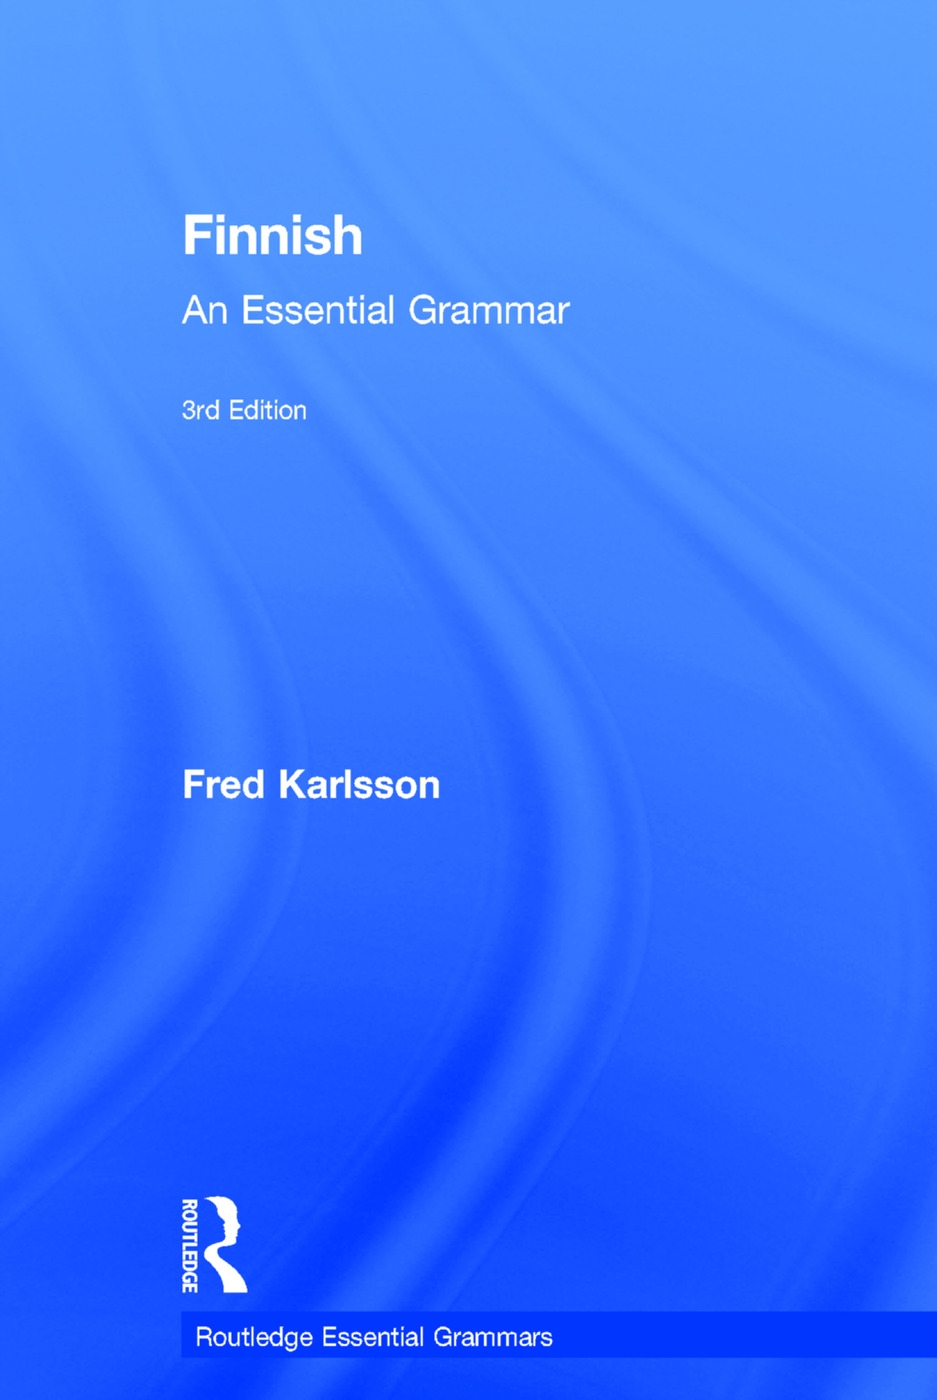 Finnish: An Essential Grammar